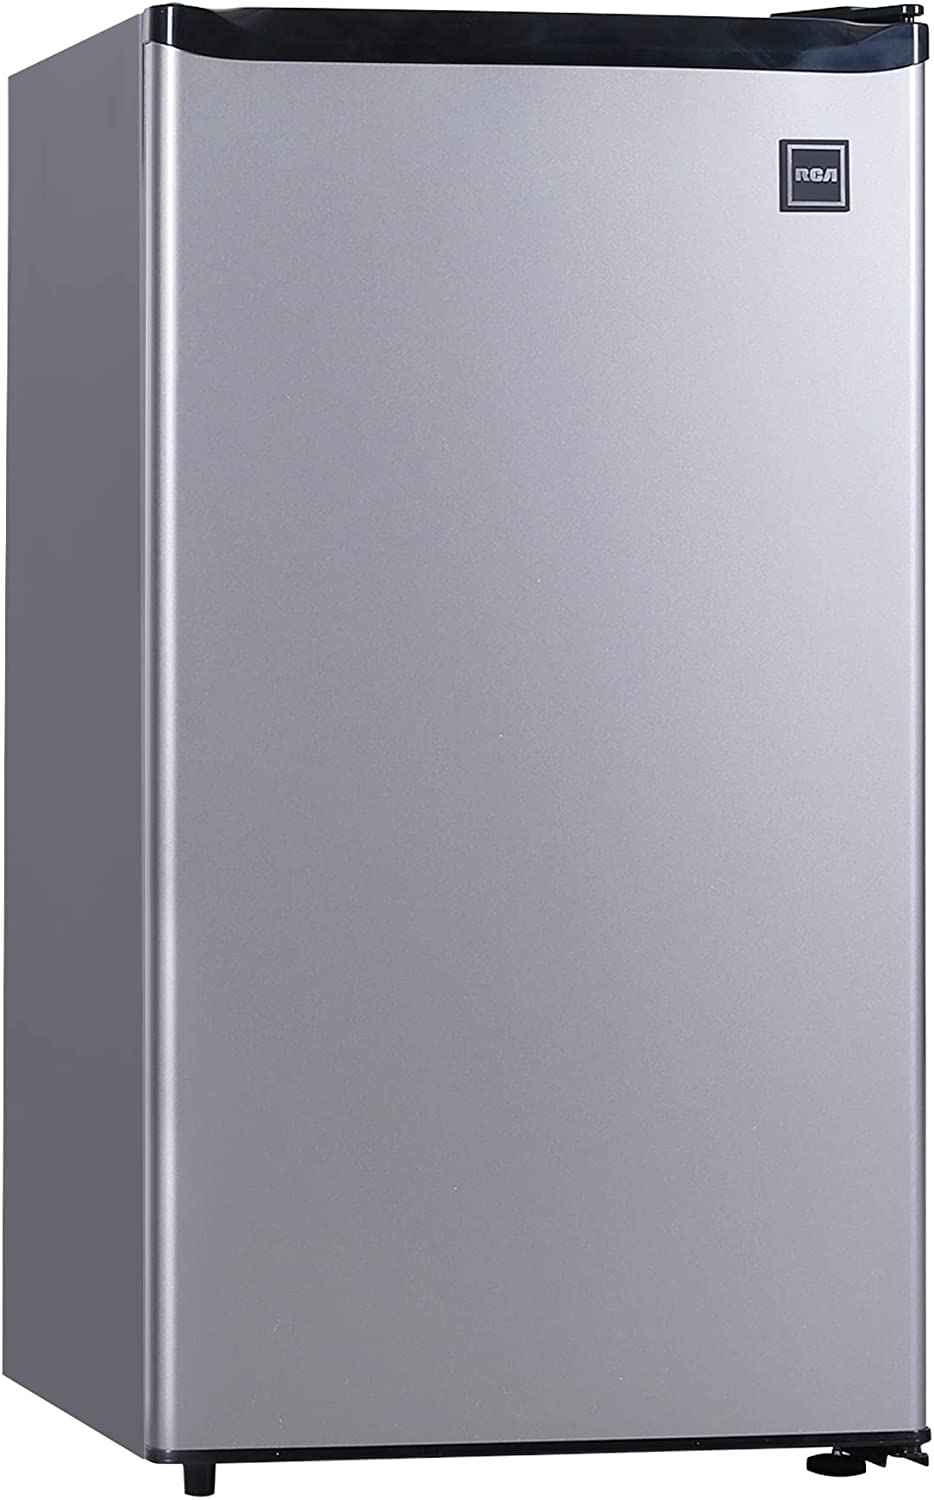 RCA RFR322 Mini Refrigerator, Compact Freezer Compartment